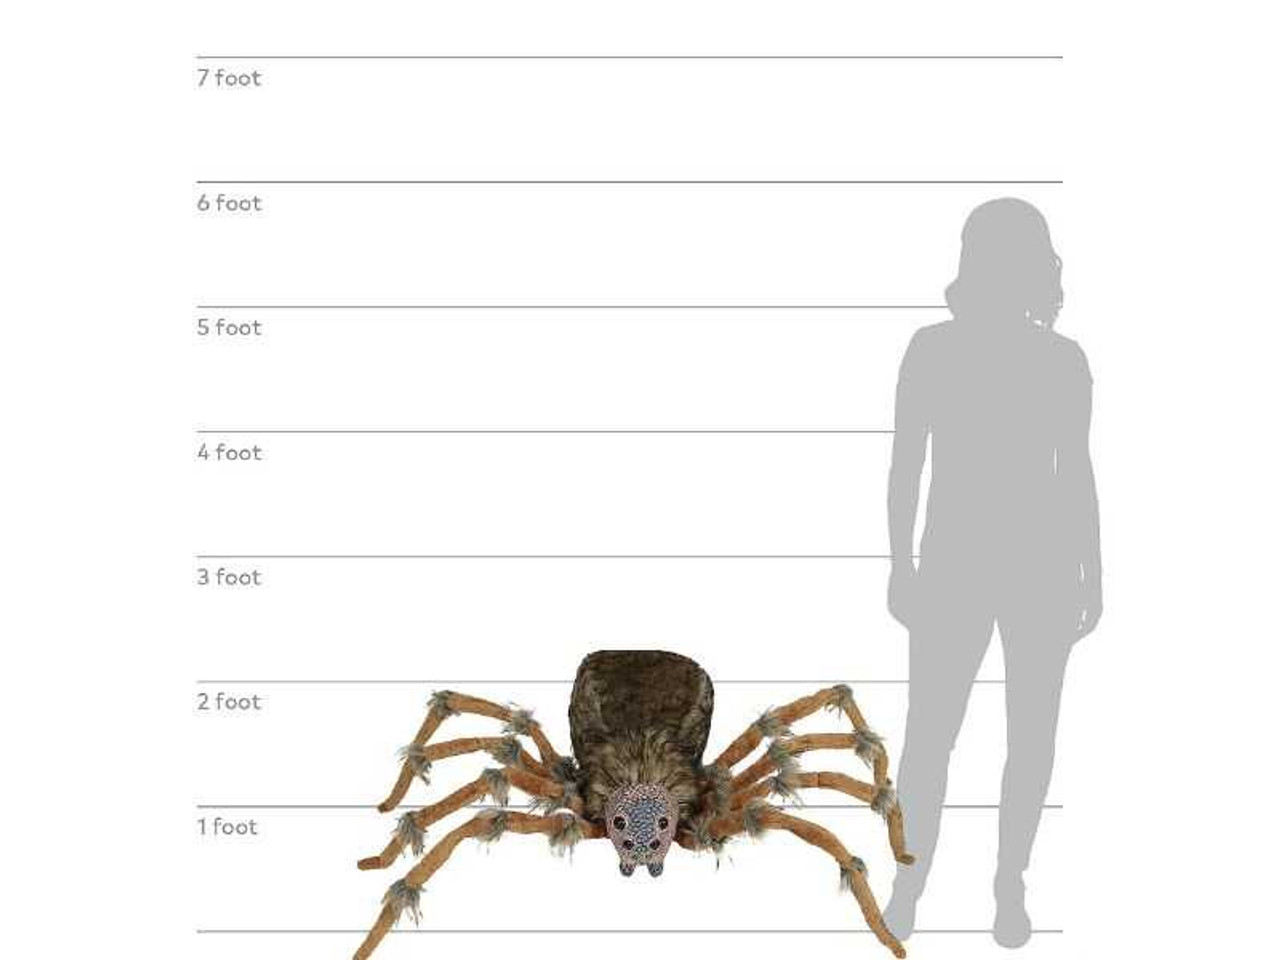 Giant Halloween Spider